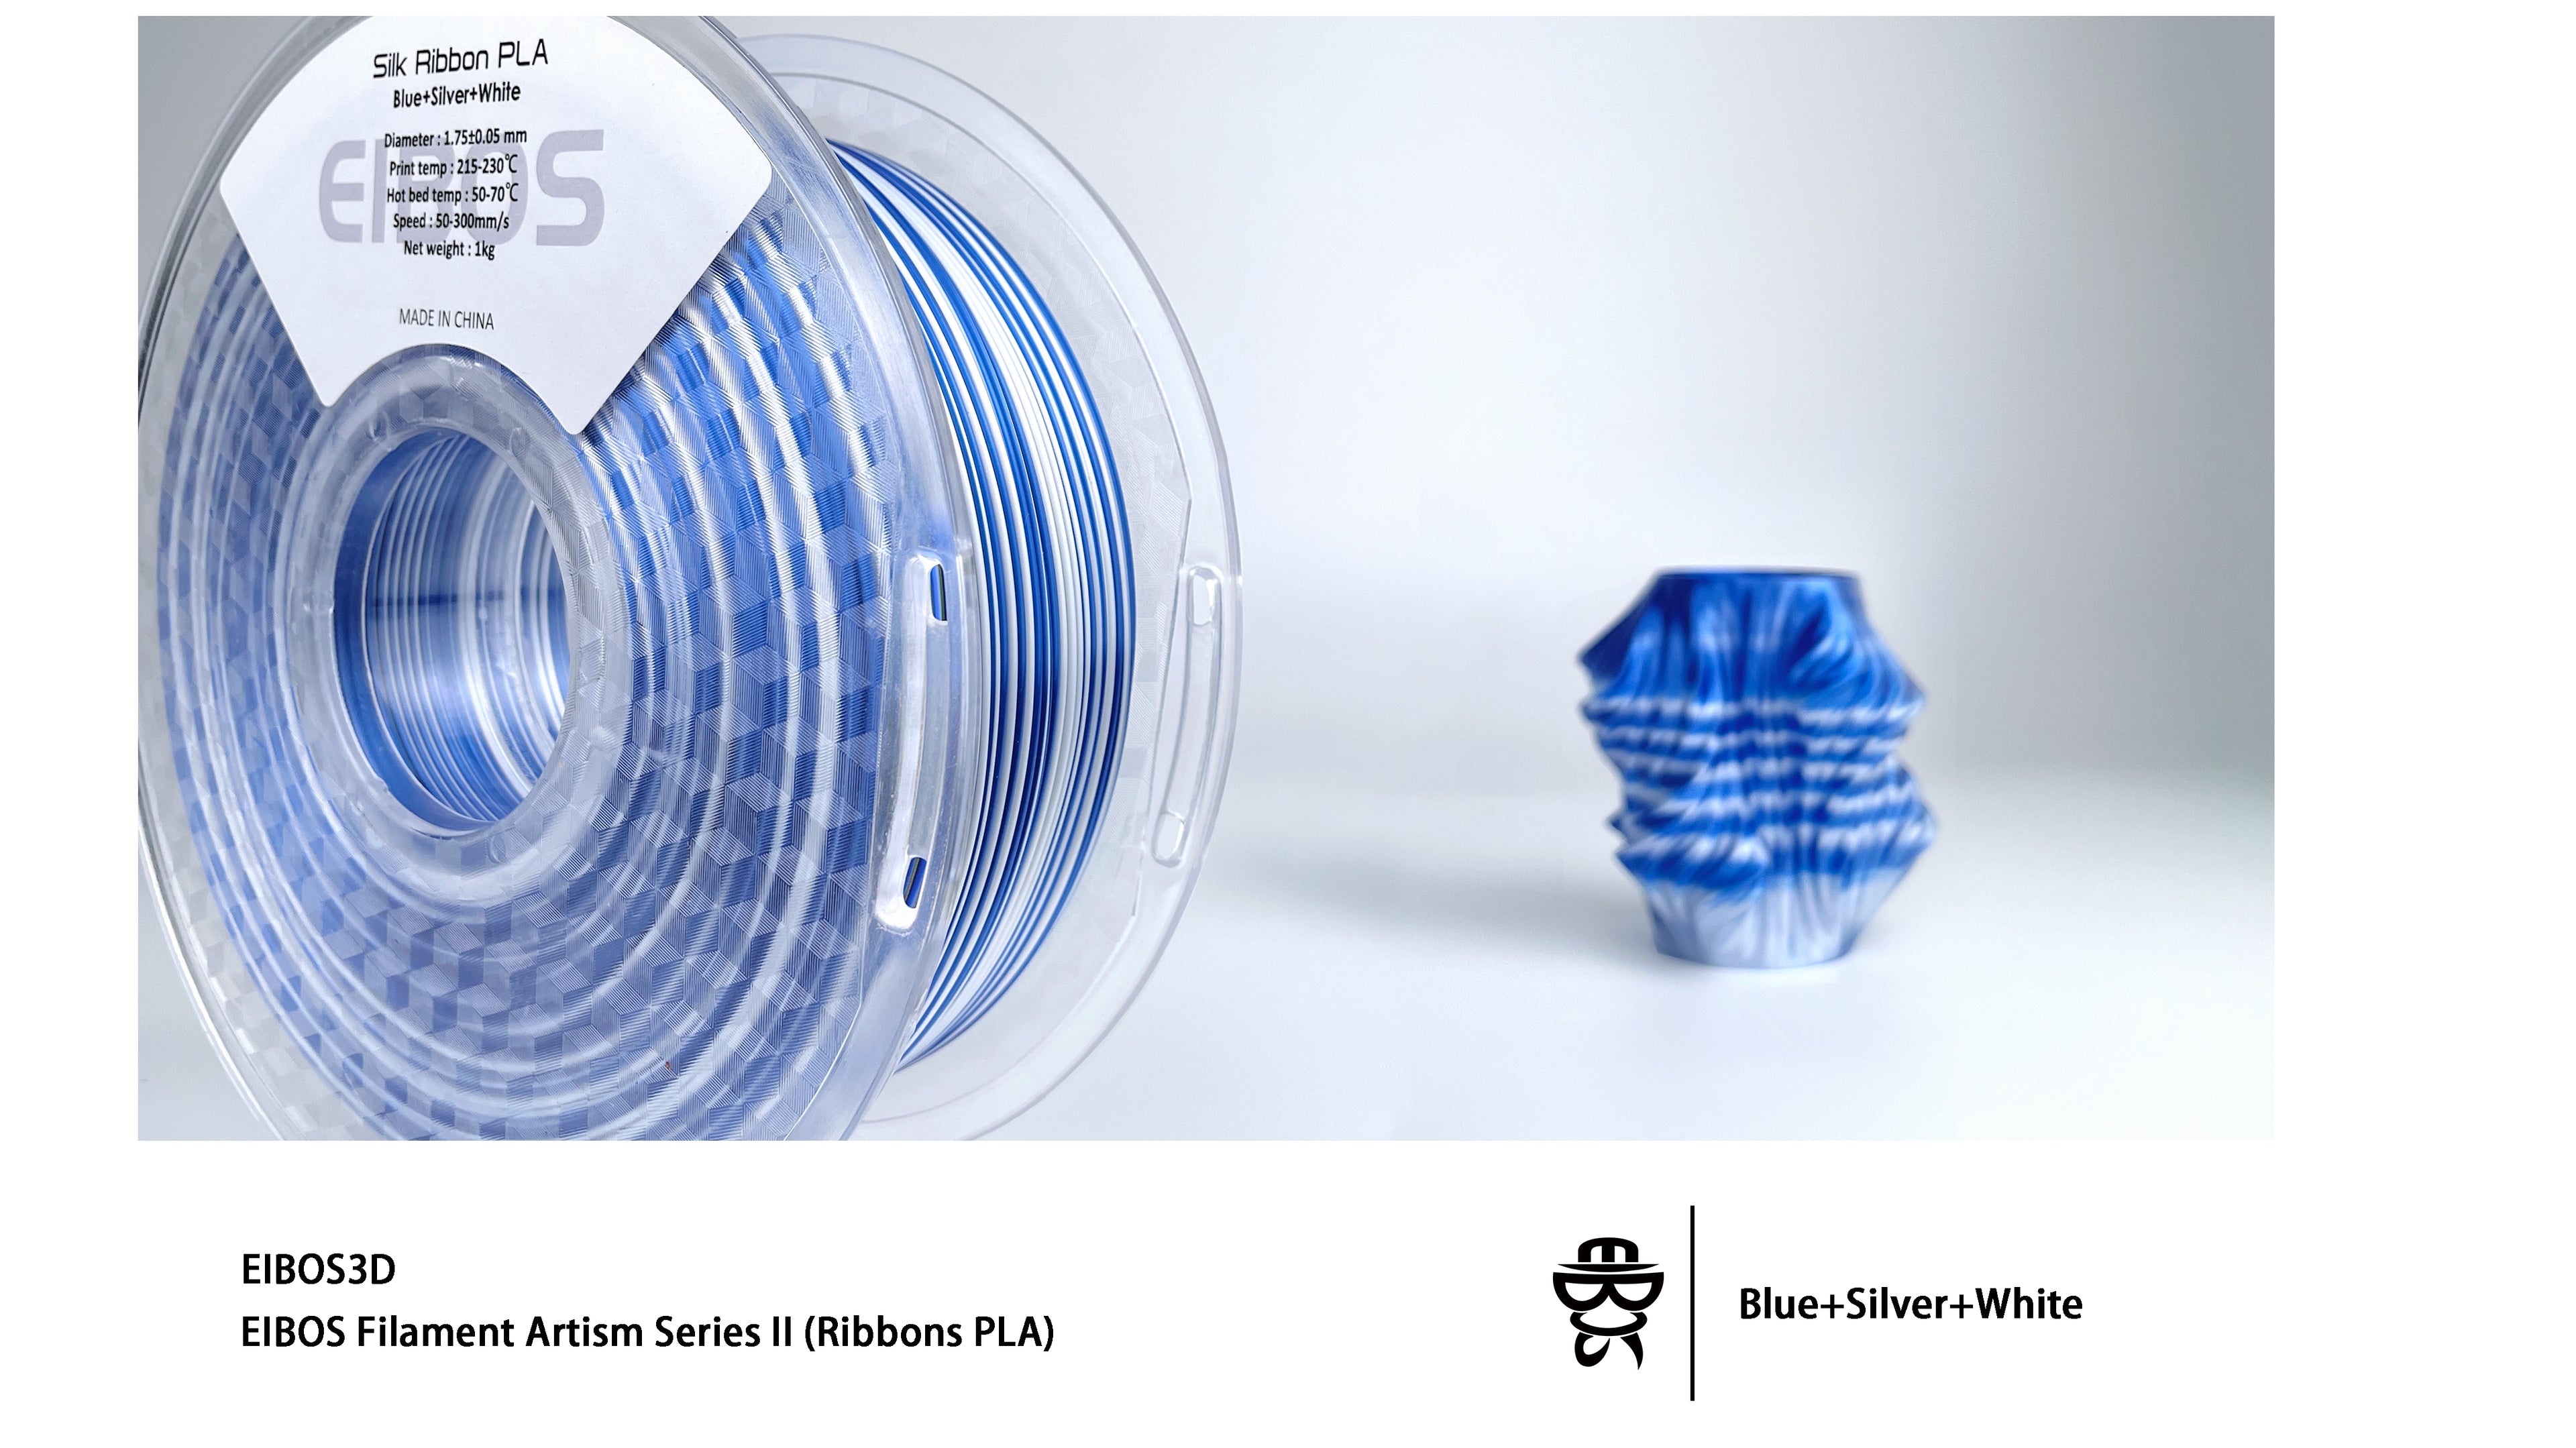 EIBOS Filament Artism Series II (Ribbons PLA)